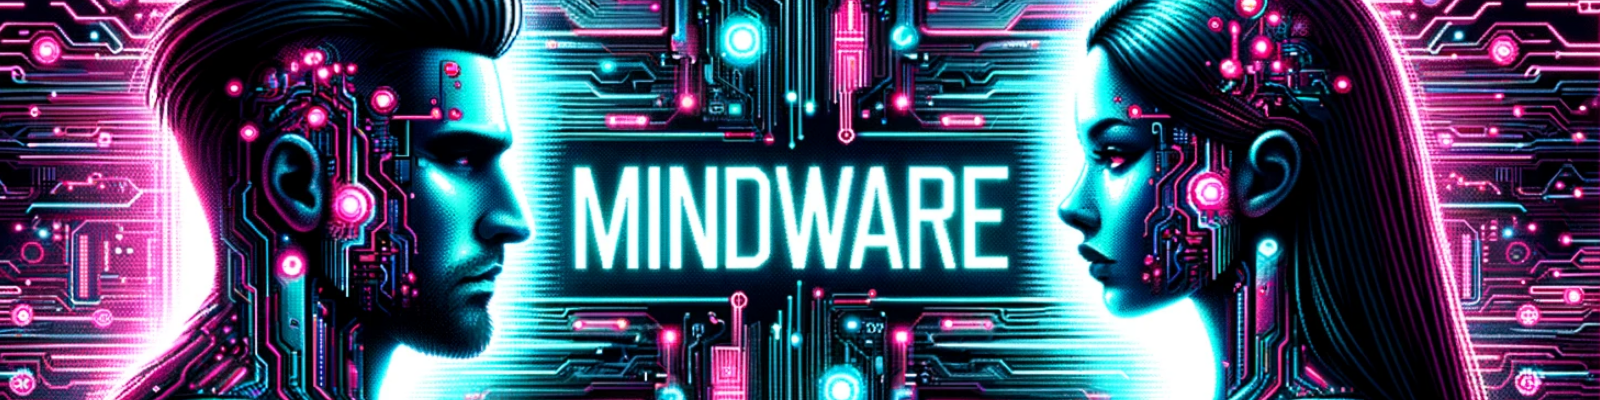 MindWare - Infected Identity